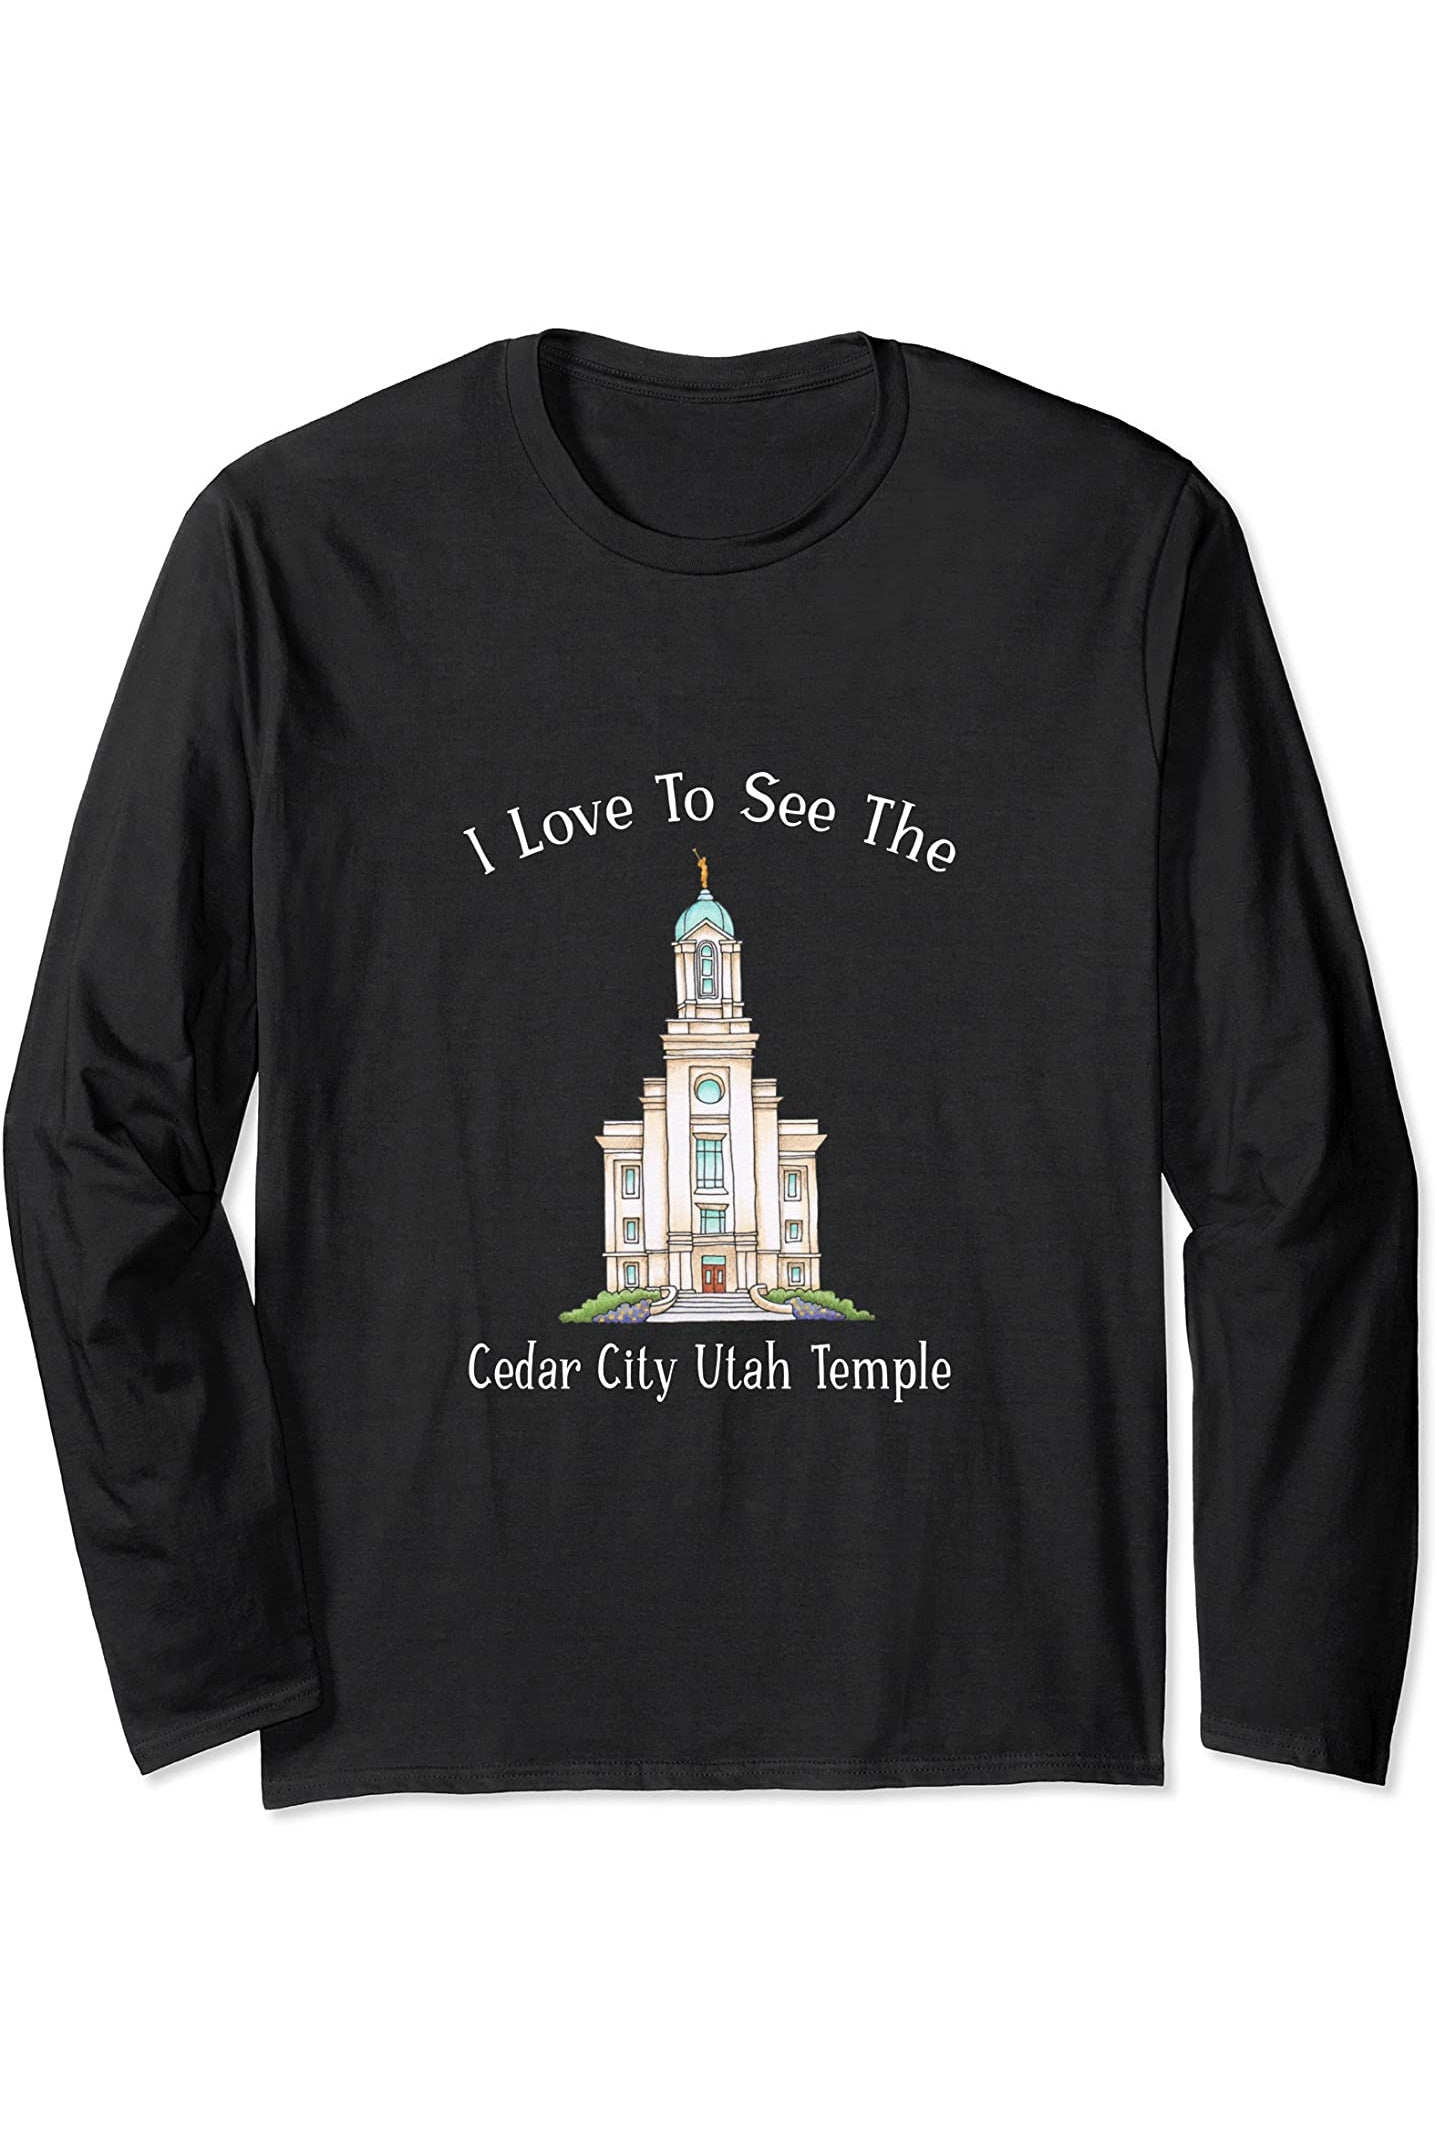 Cedar City Utah Temple Long Sleeve T-Shirt - Happy Style (English) US